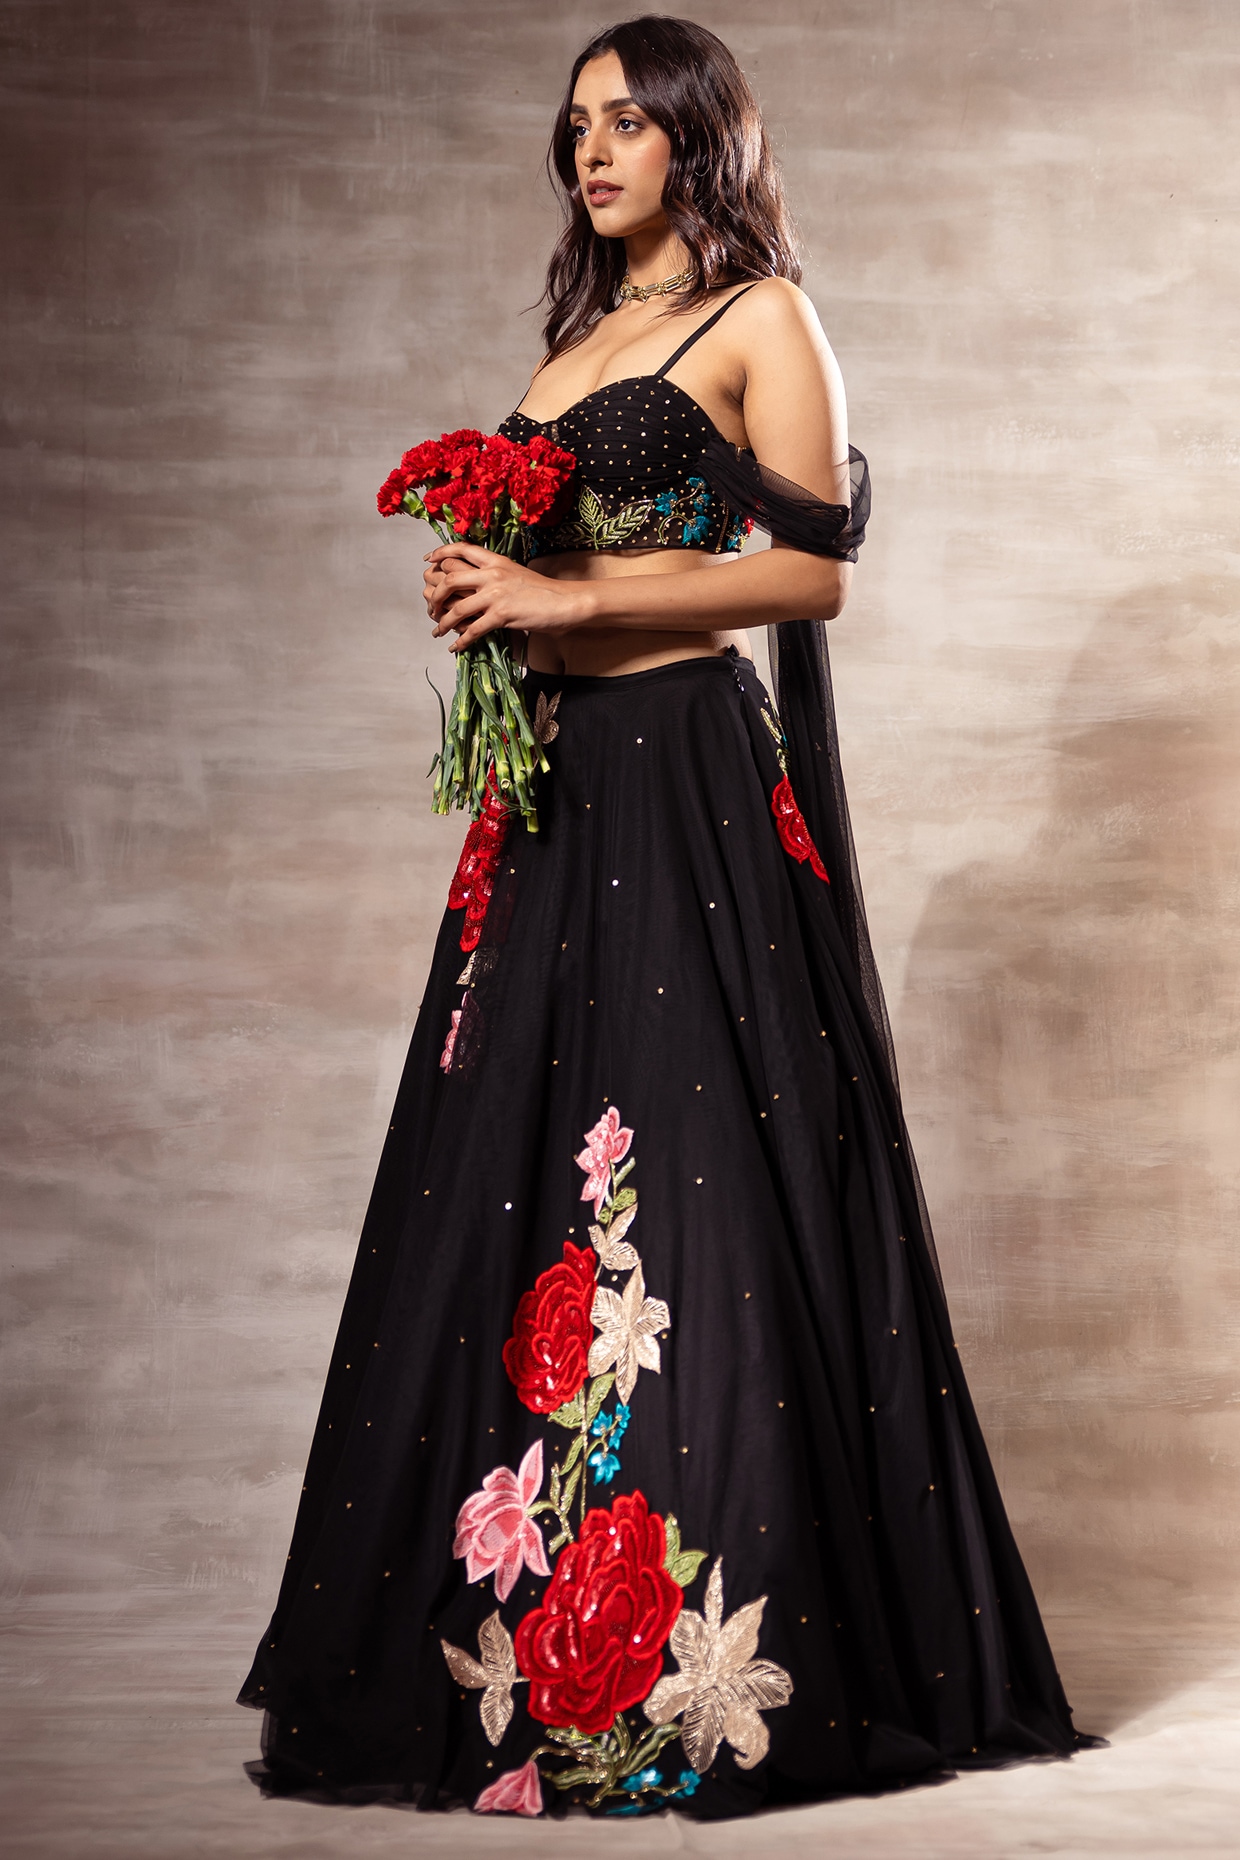 Sequin Work Black Lehenga Choli Net Lengha Wedding Bollywood Dress Sari  Saree | eBay